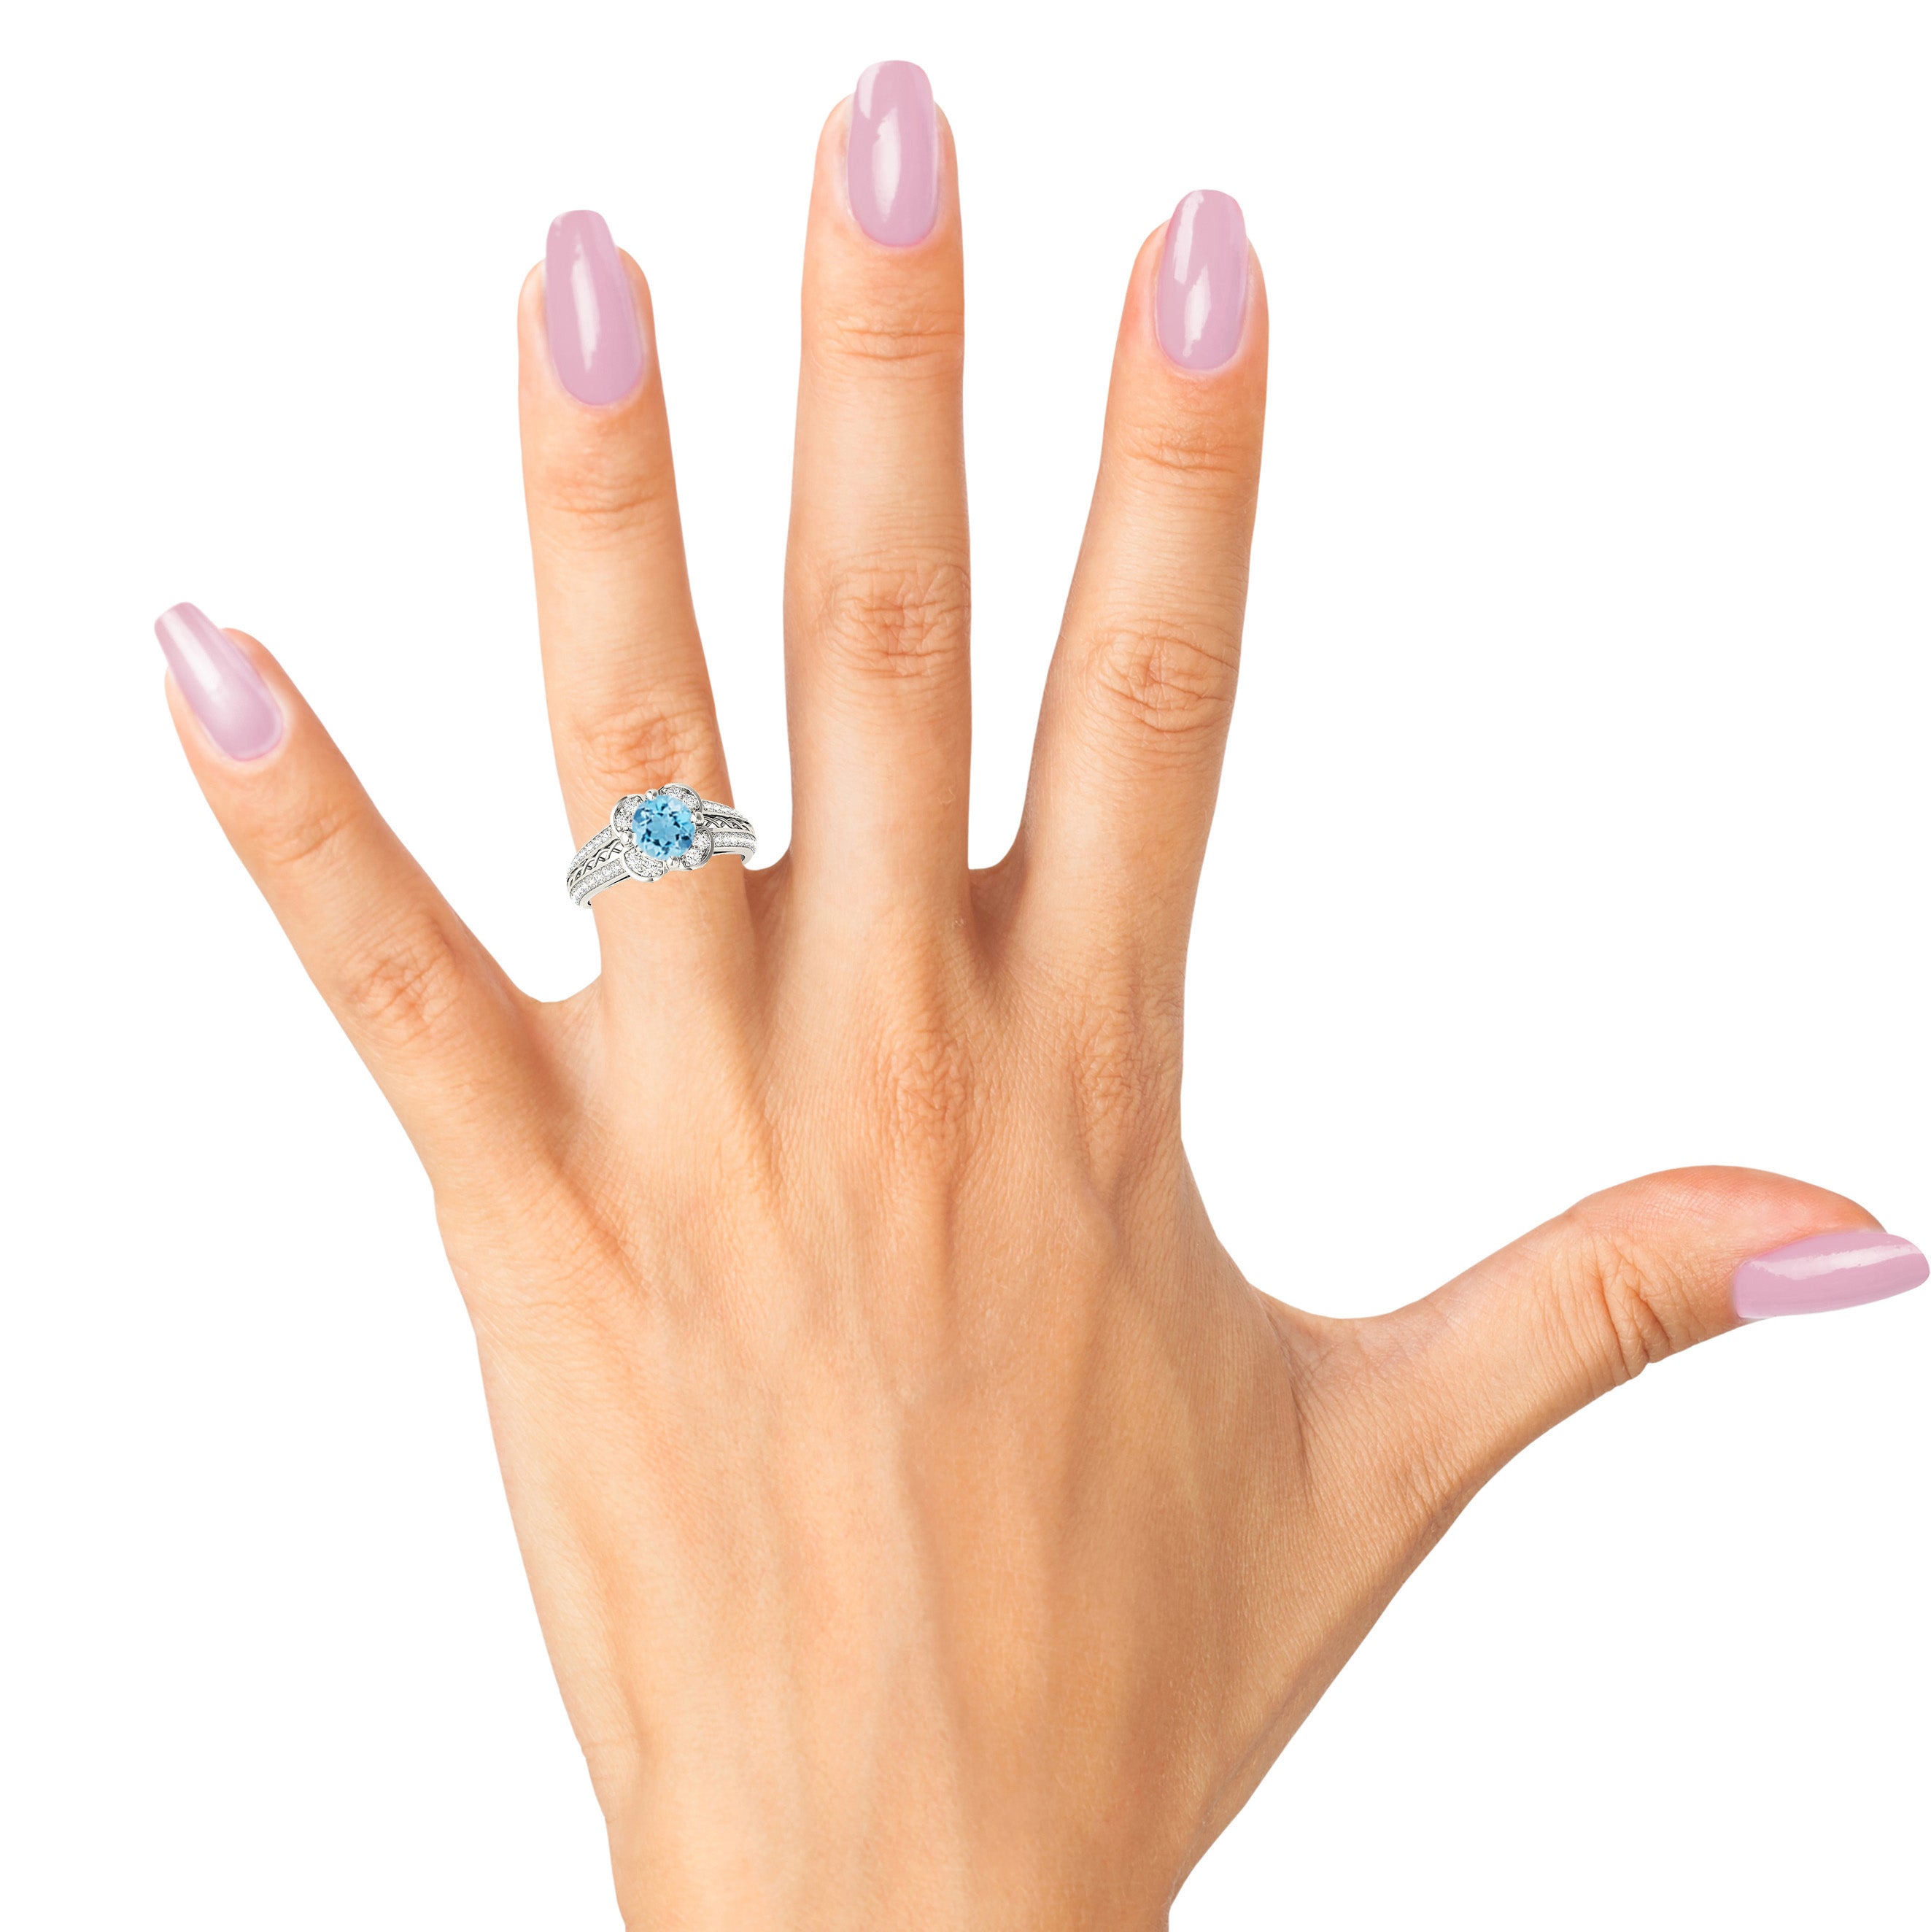 1.75 ct. Genuine Aquamarine Ring With 0.50 ctw. Diamond Floral Halo, Graduating Diamond and Solid Gold Twist Band |Blue Aquamarine Halo Ring-in 14K/18K White, Yellow, Rose Gold and Platinum - Christmas Jewelry Gift -VIRABYANI